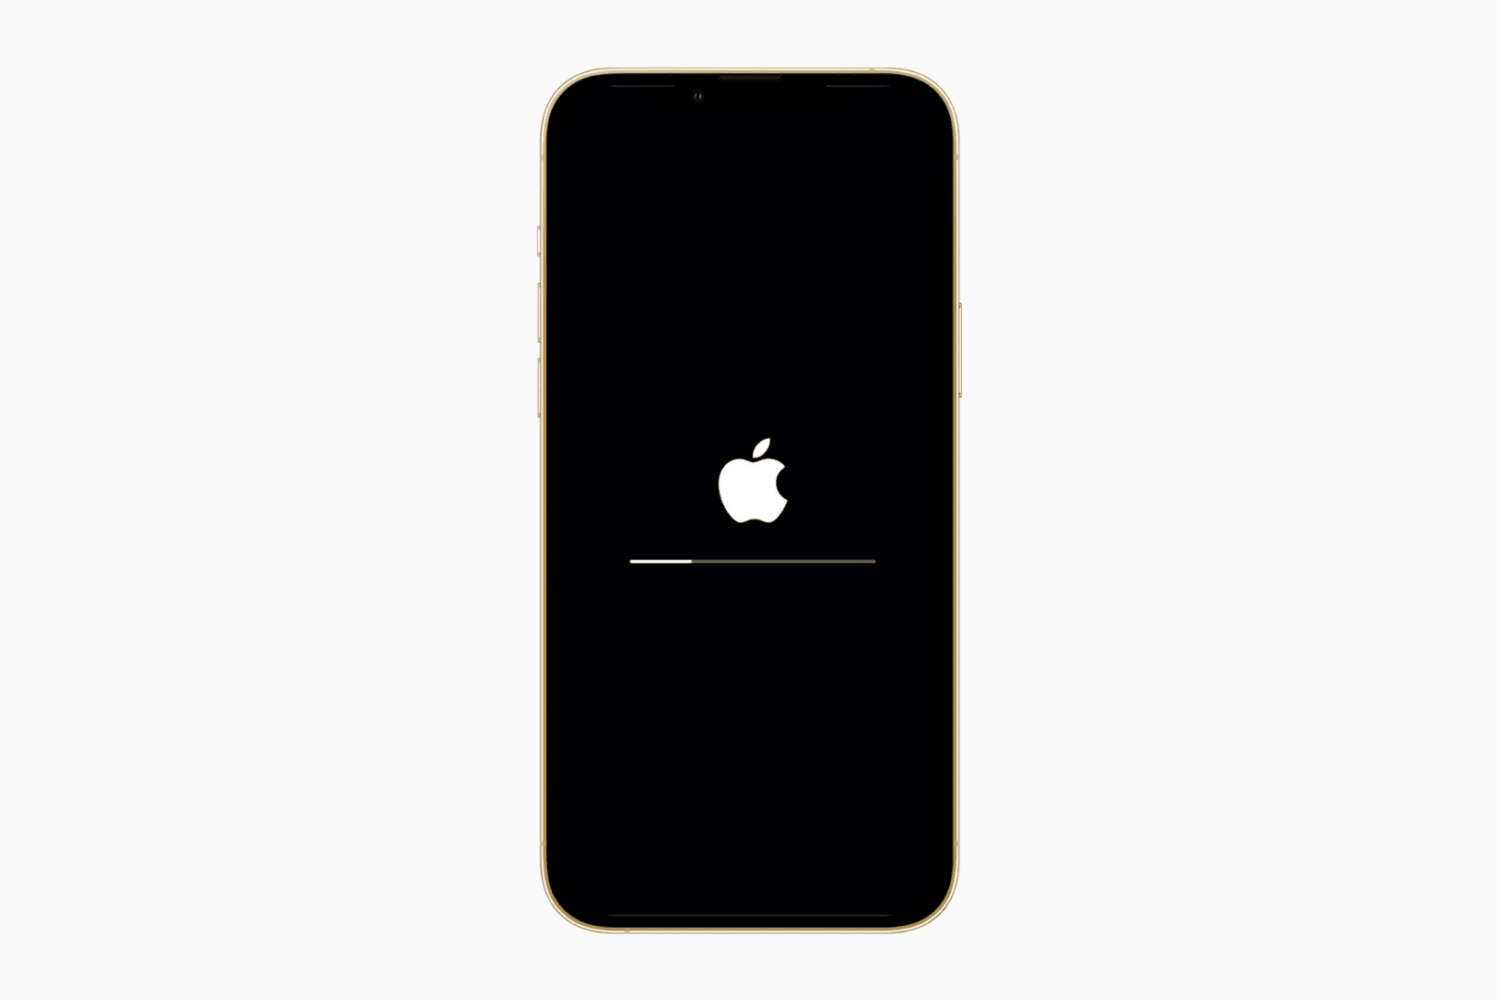 iPhone with white Apple logo and progress bar while erasing it